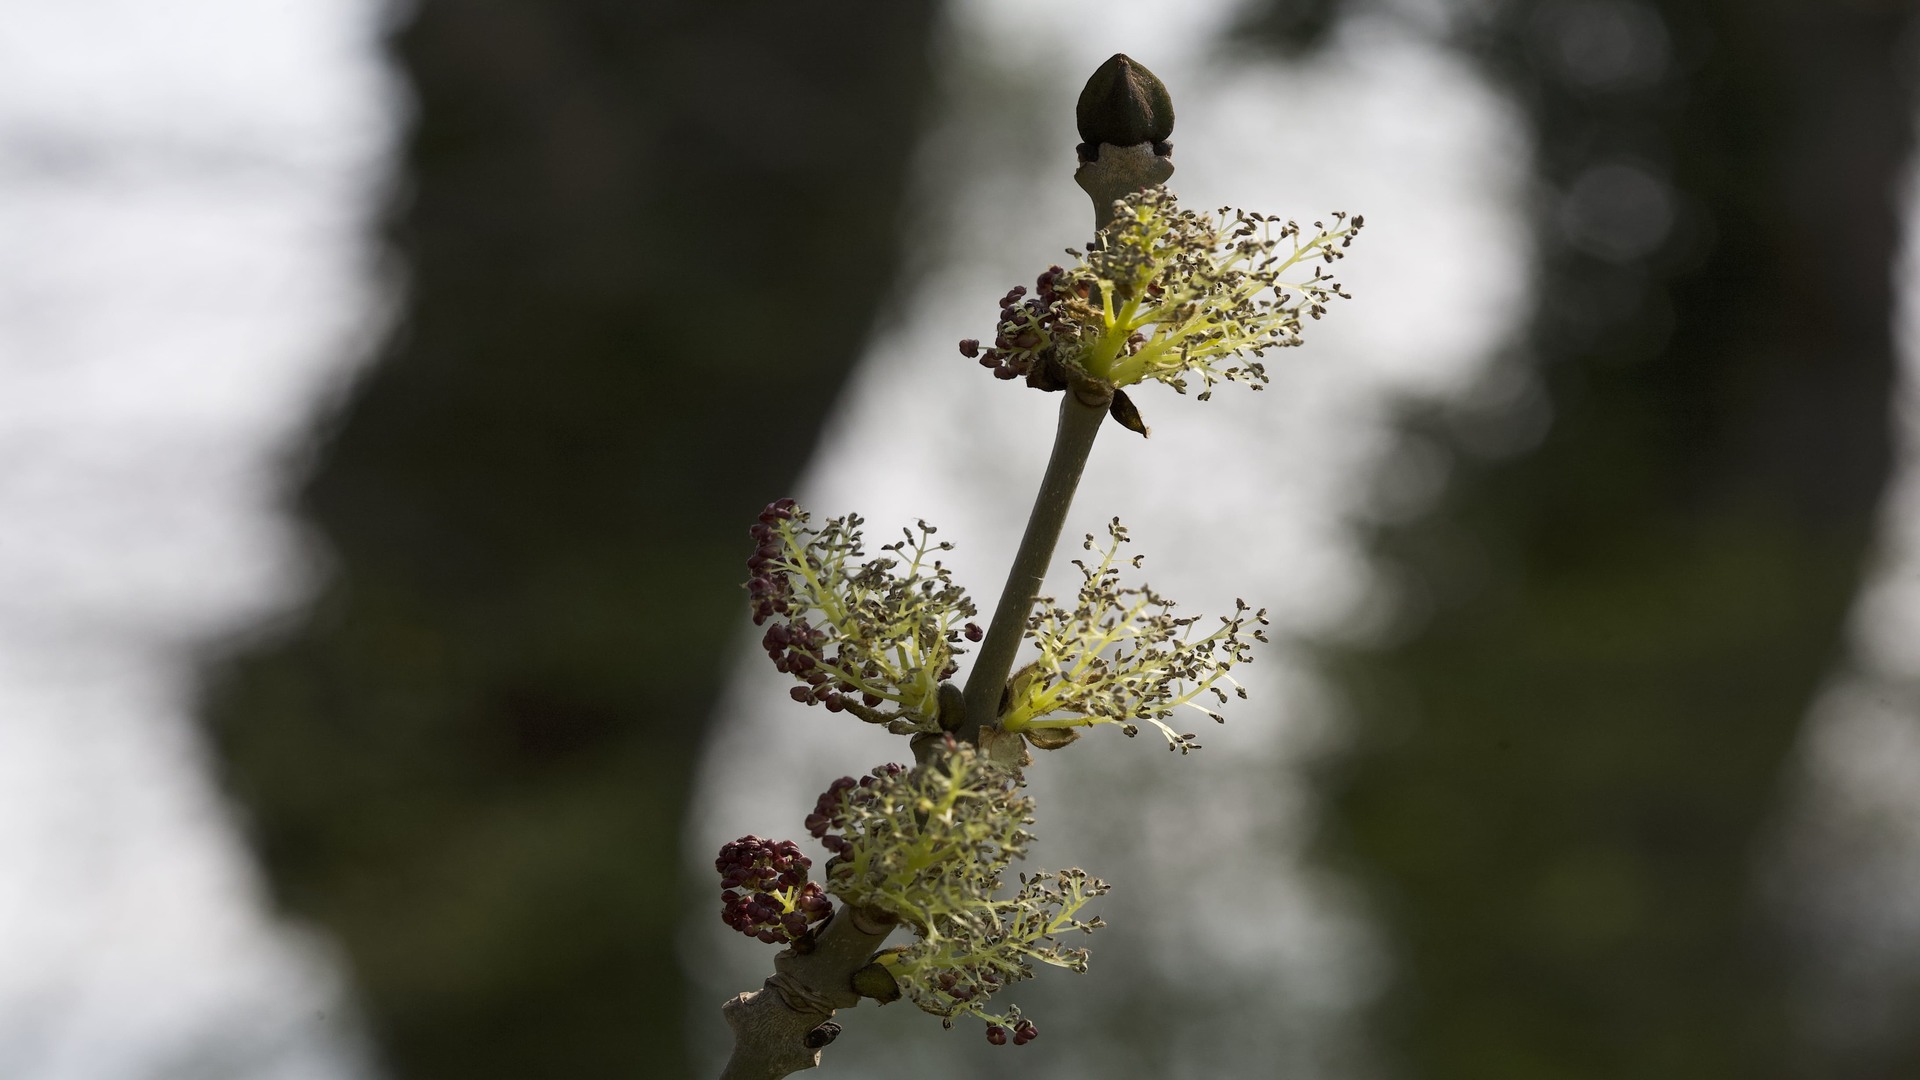 Esche-Blüte, Fraxinus excelsior folium